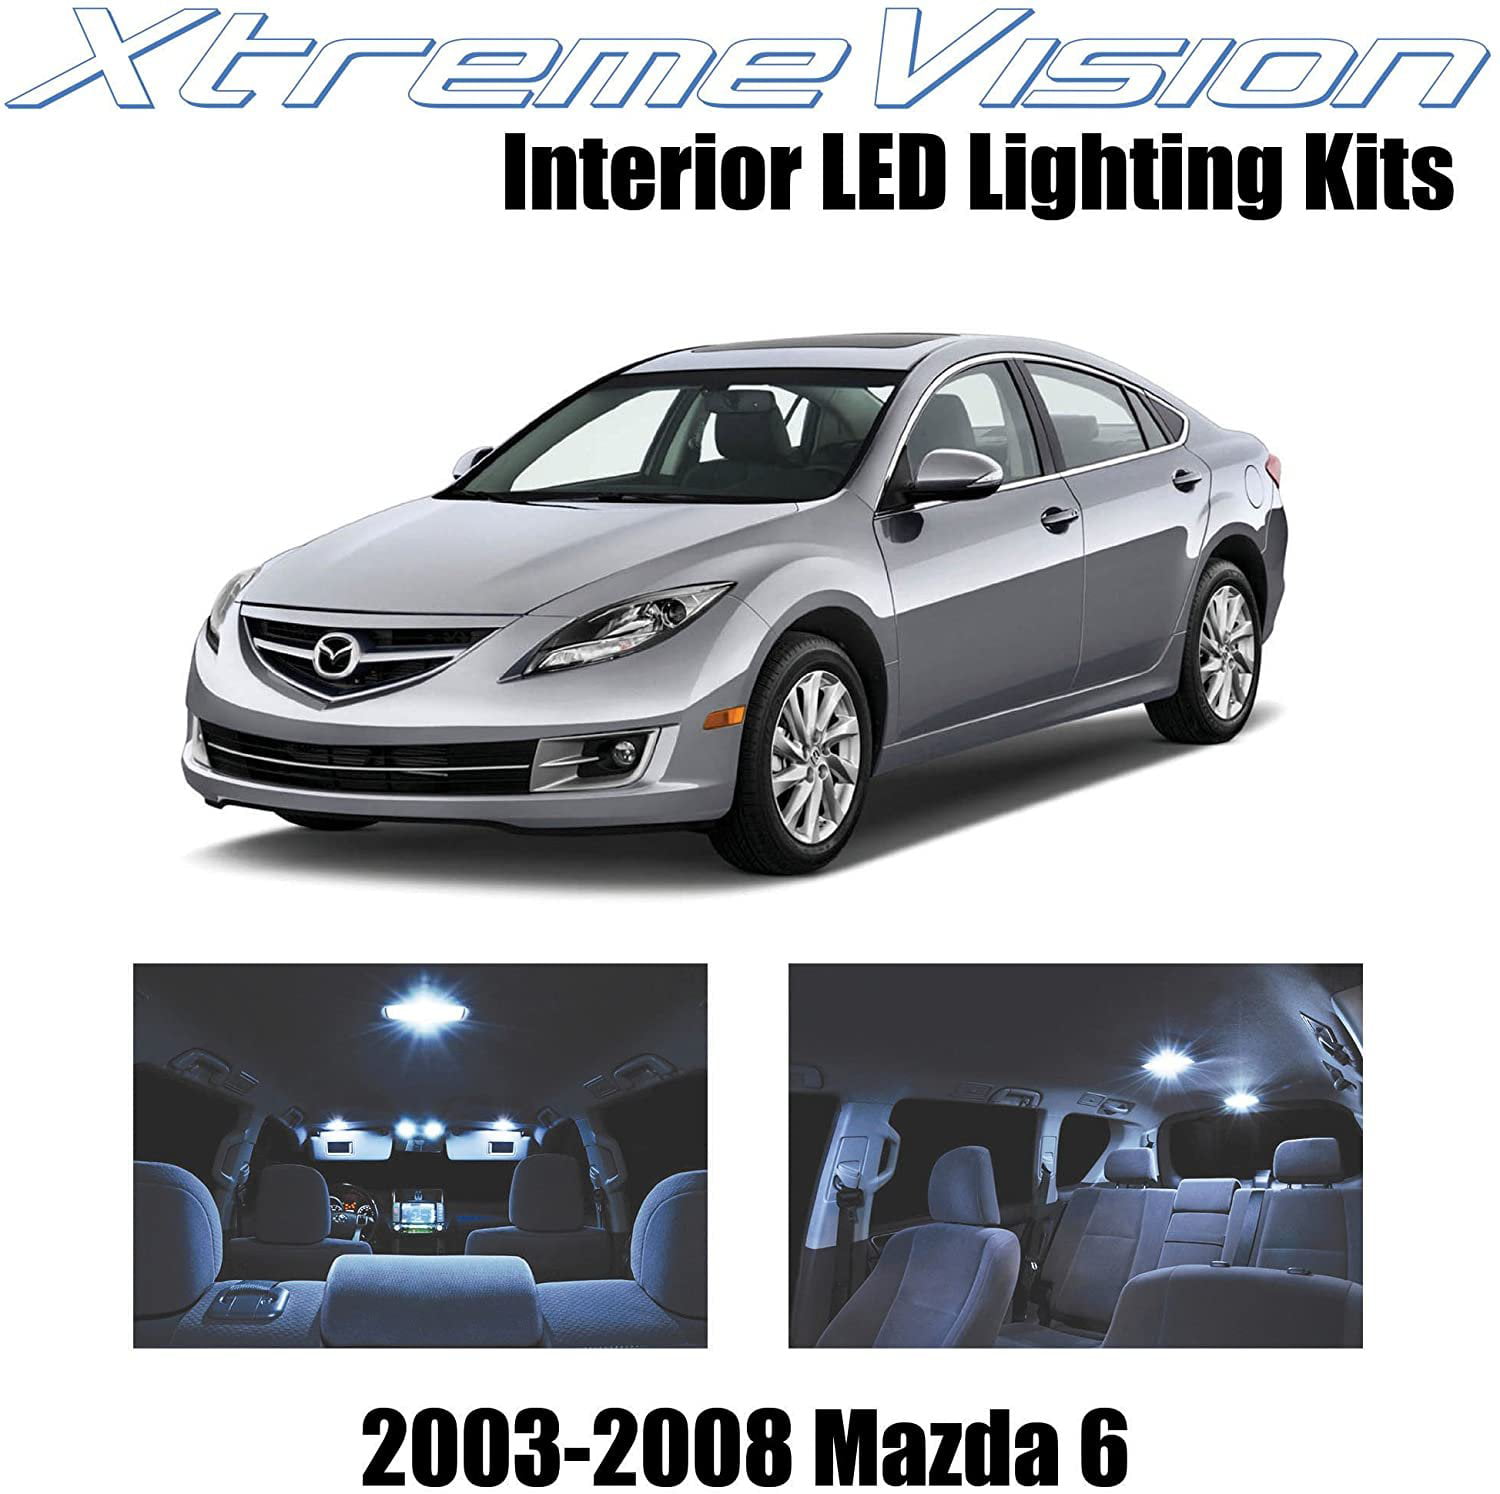 12 x Premium Red LED Lights Interior Package Kit for 2003-2008 Mazda 6